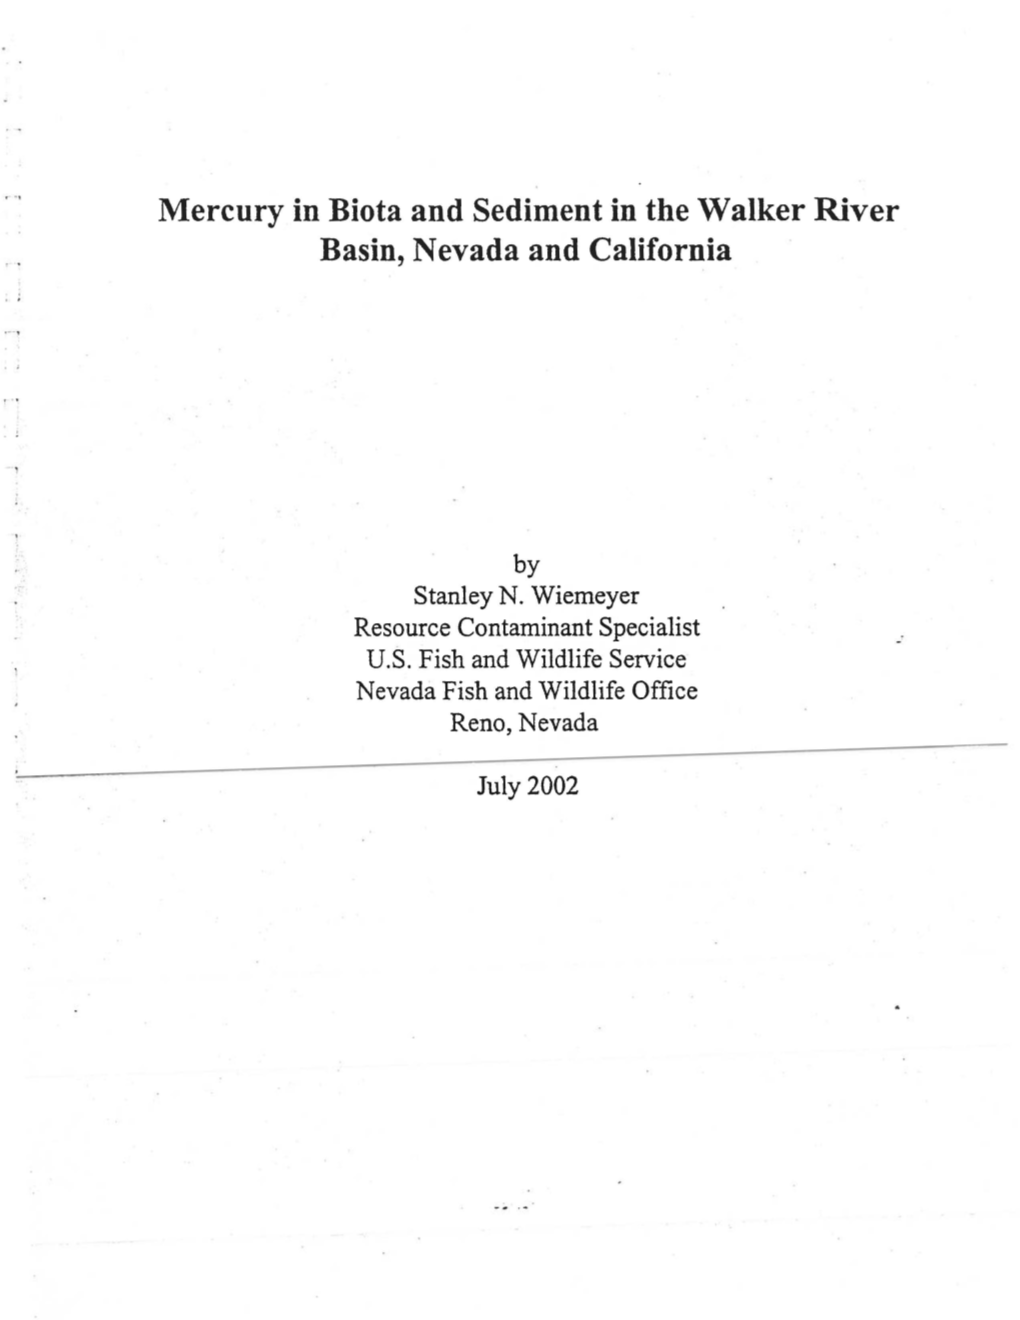 Mercury in Biota and Sediment in the Walker River Basin, Nevada and California